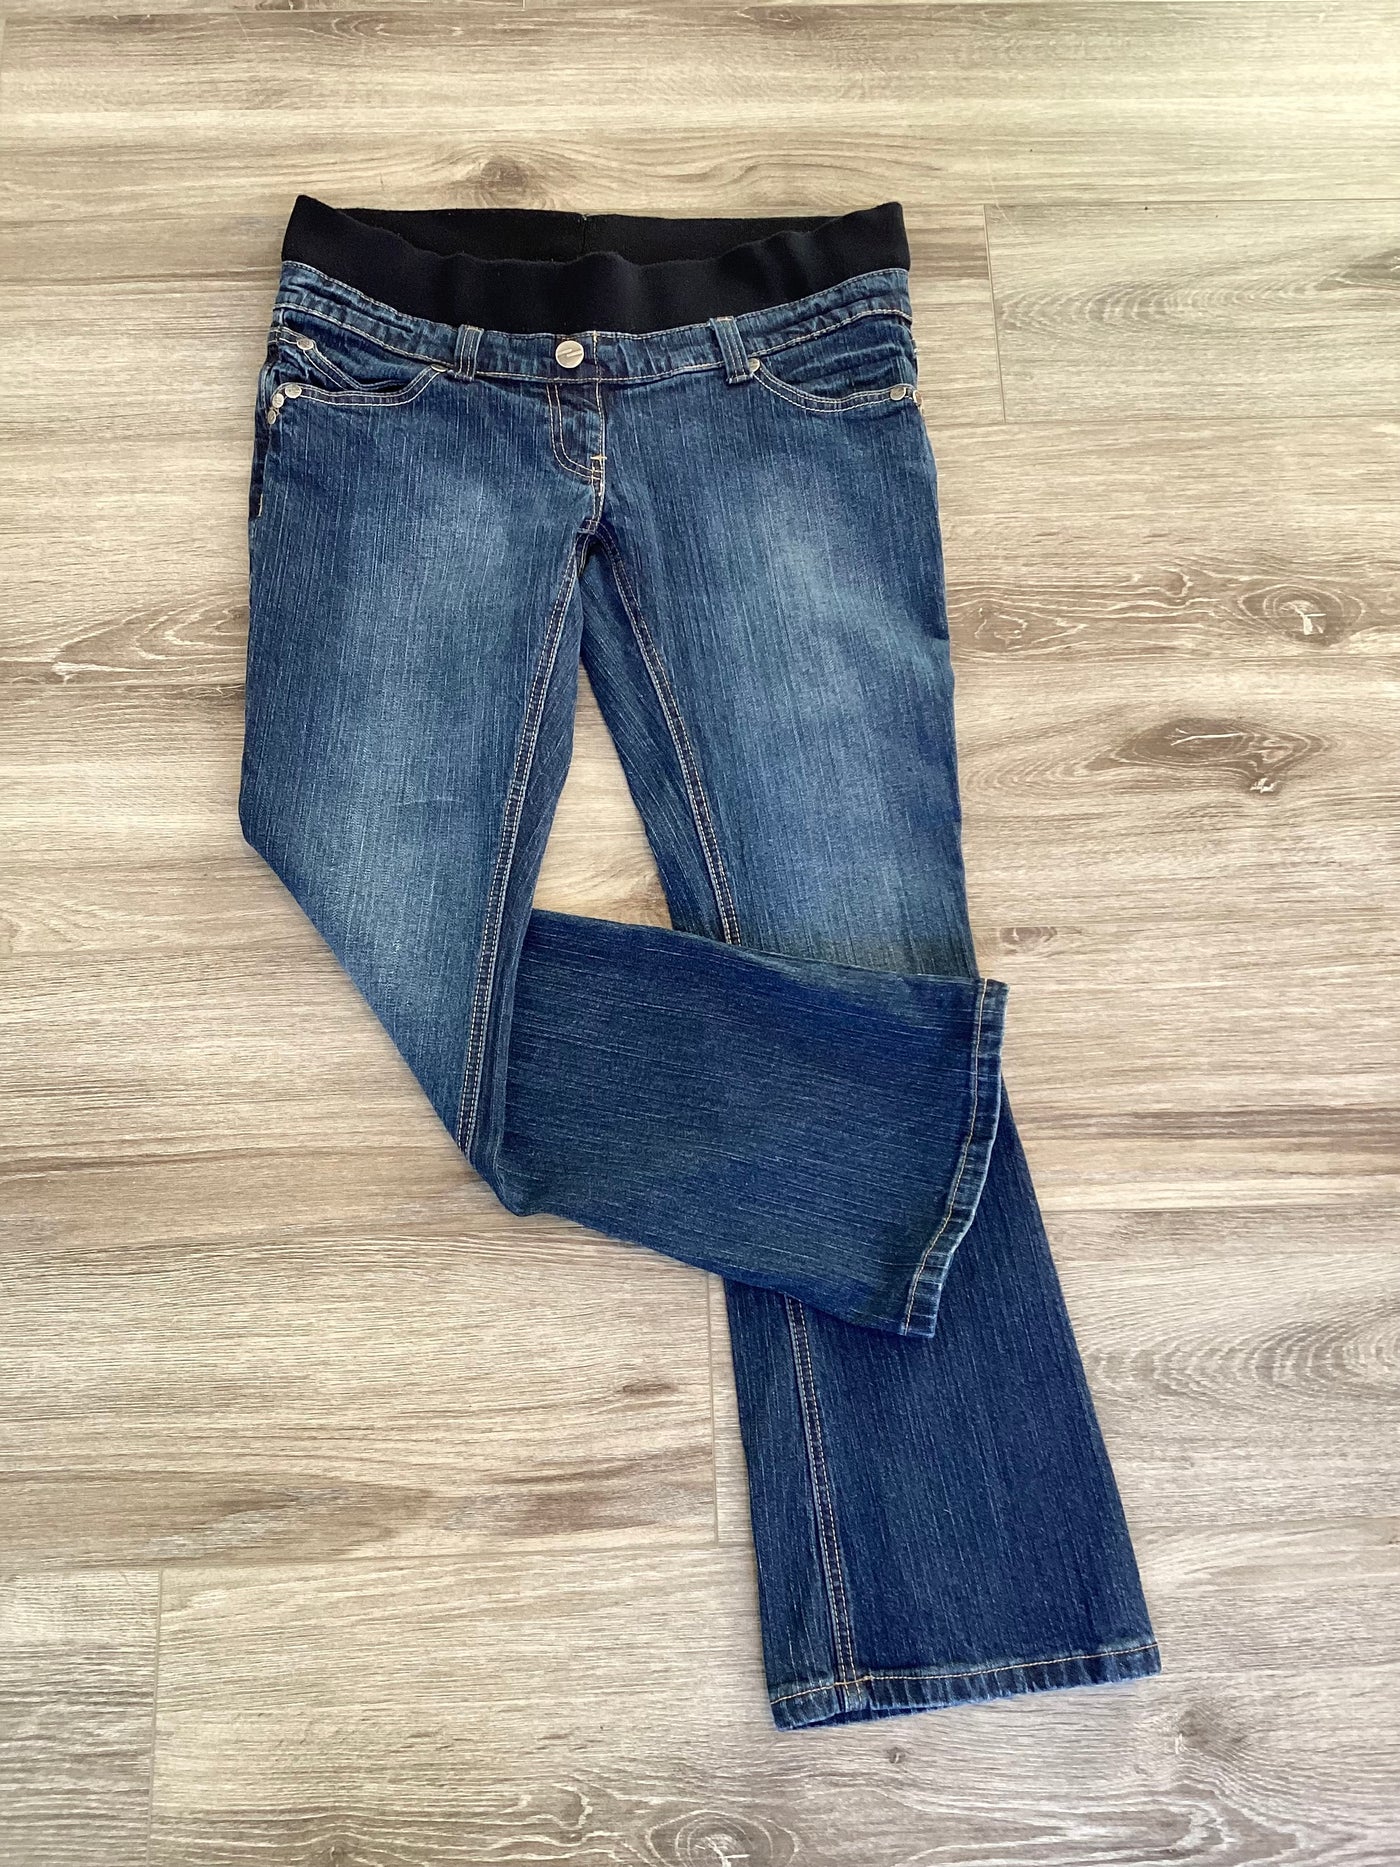 Dorothy Perkins Maternity dark blue underbump bootcut jeans - Size 10